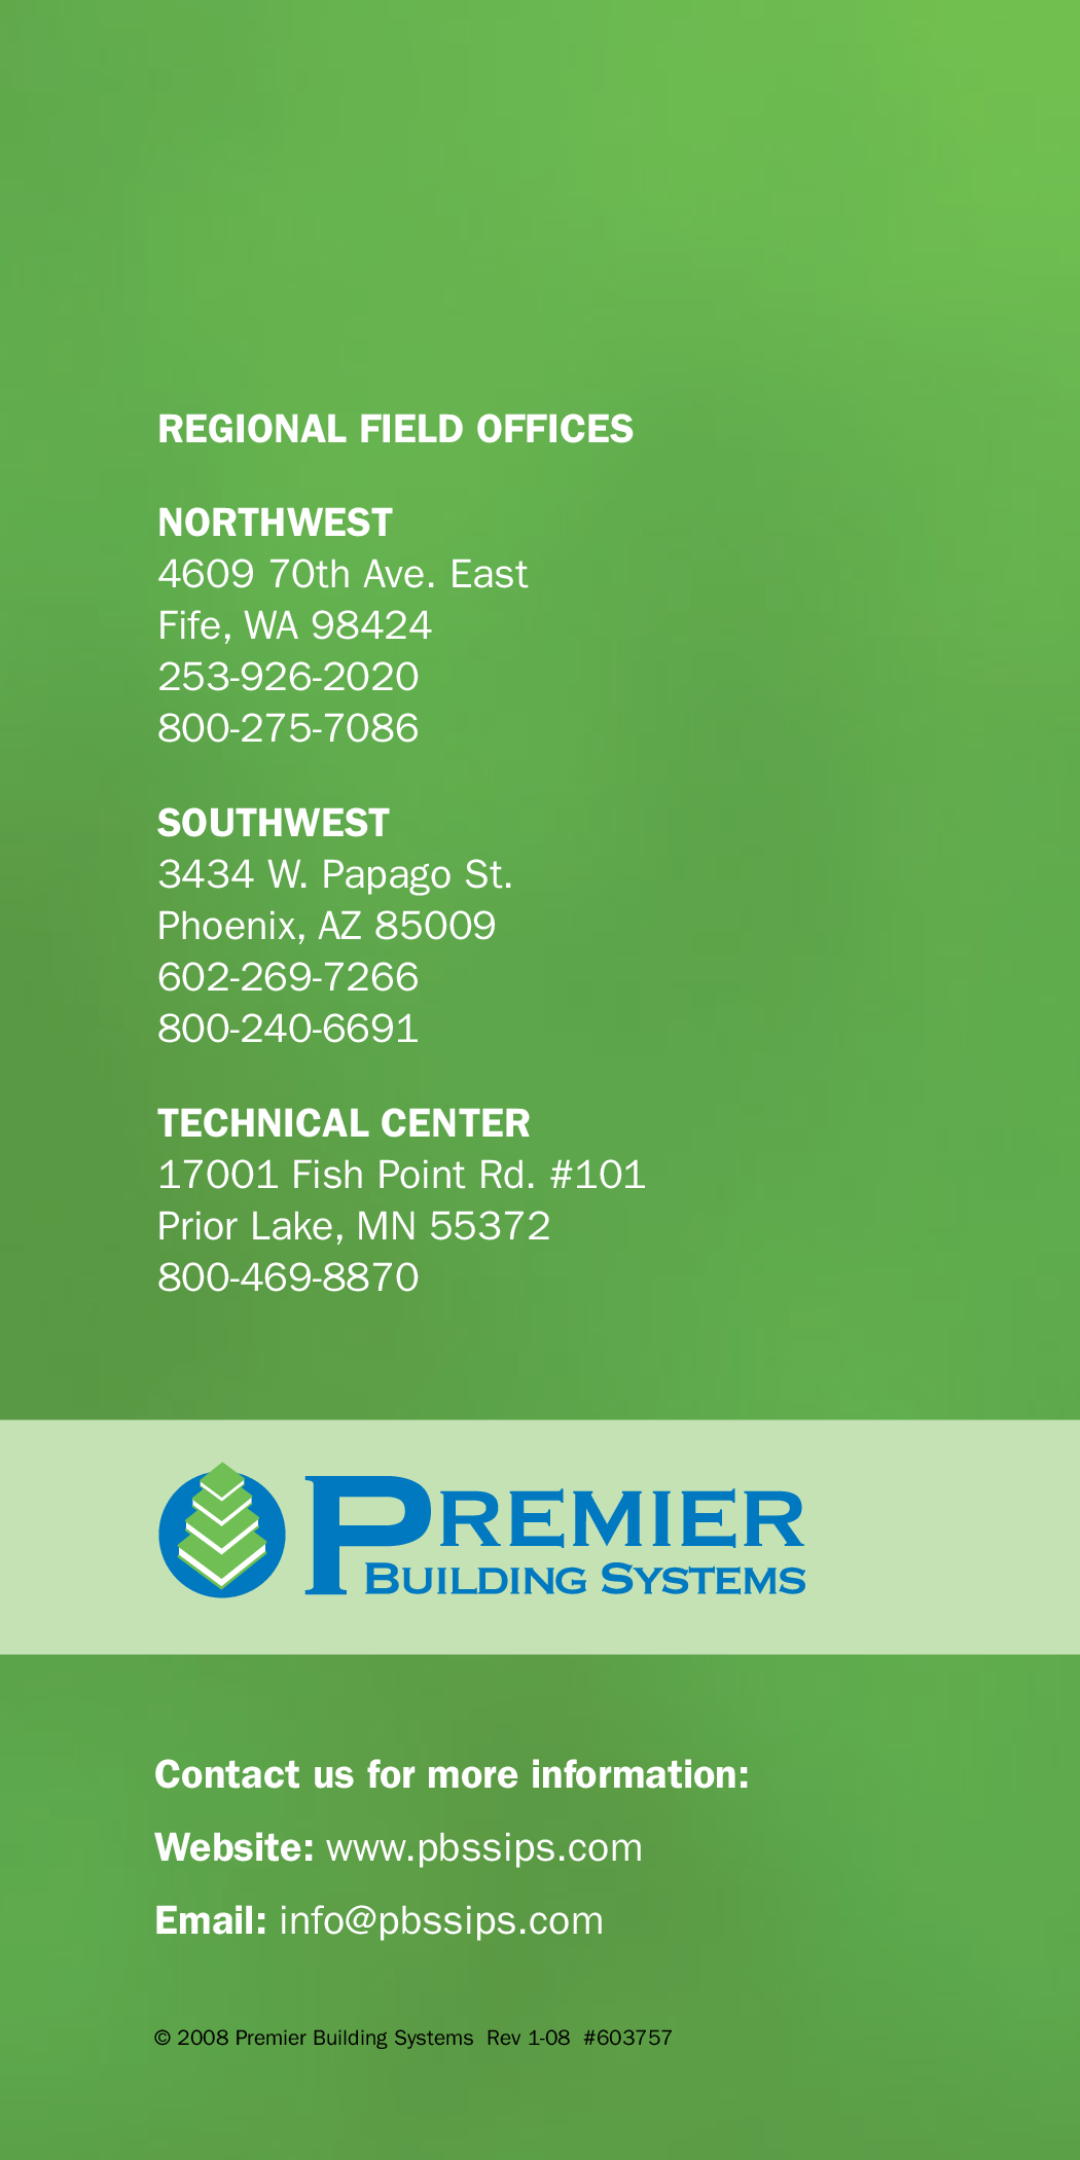 Premier Floors Regional Field Offices Northwest, 4609 70th Ave. East Fife, WA, Southwest, 3434 W. Papago St. Phoenix, AZ 